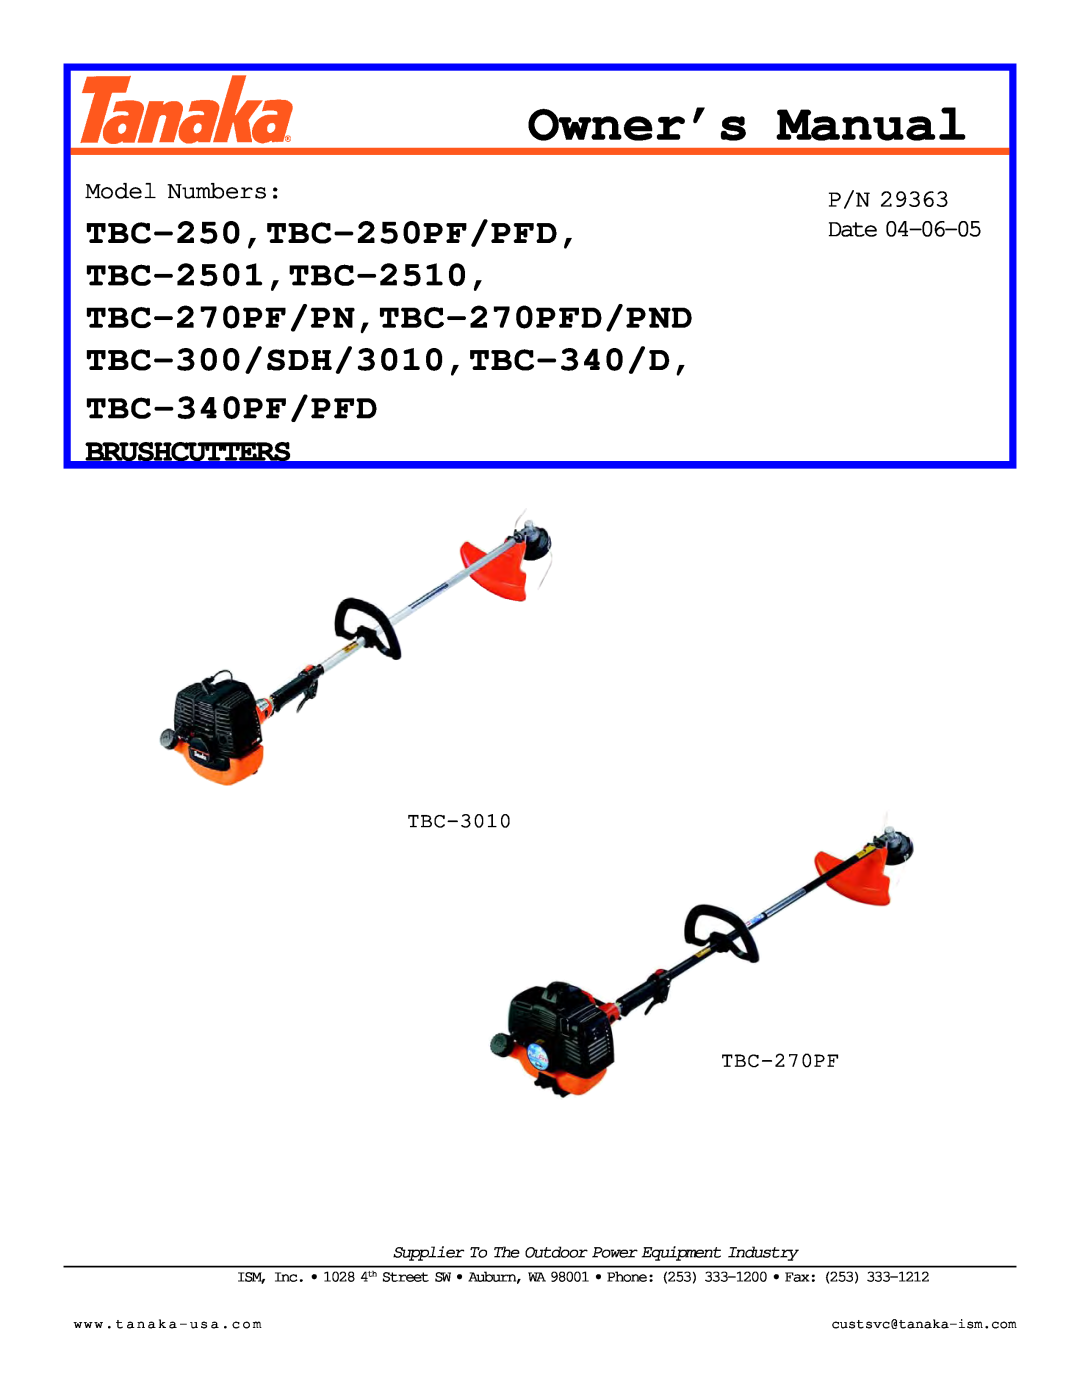 Tanaka TBC-270PND/PFD manual Model Number, Date, Illustrated Parts Manual, TBC-270PFD/PND, Low Emission Brushcutter 